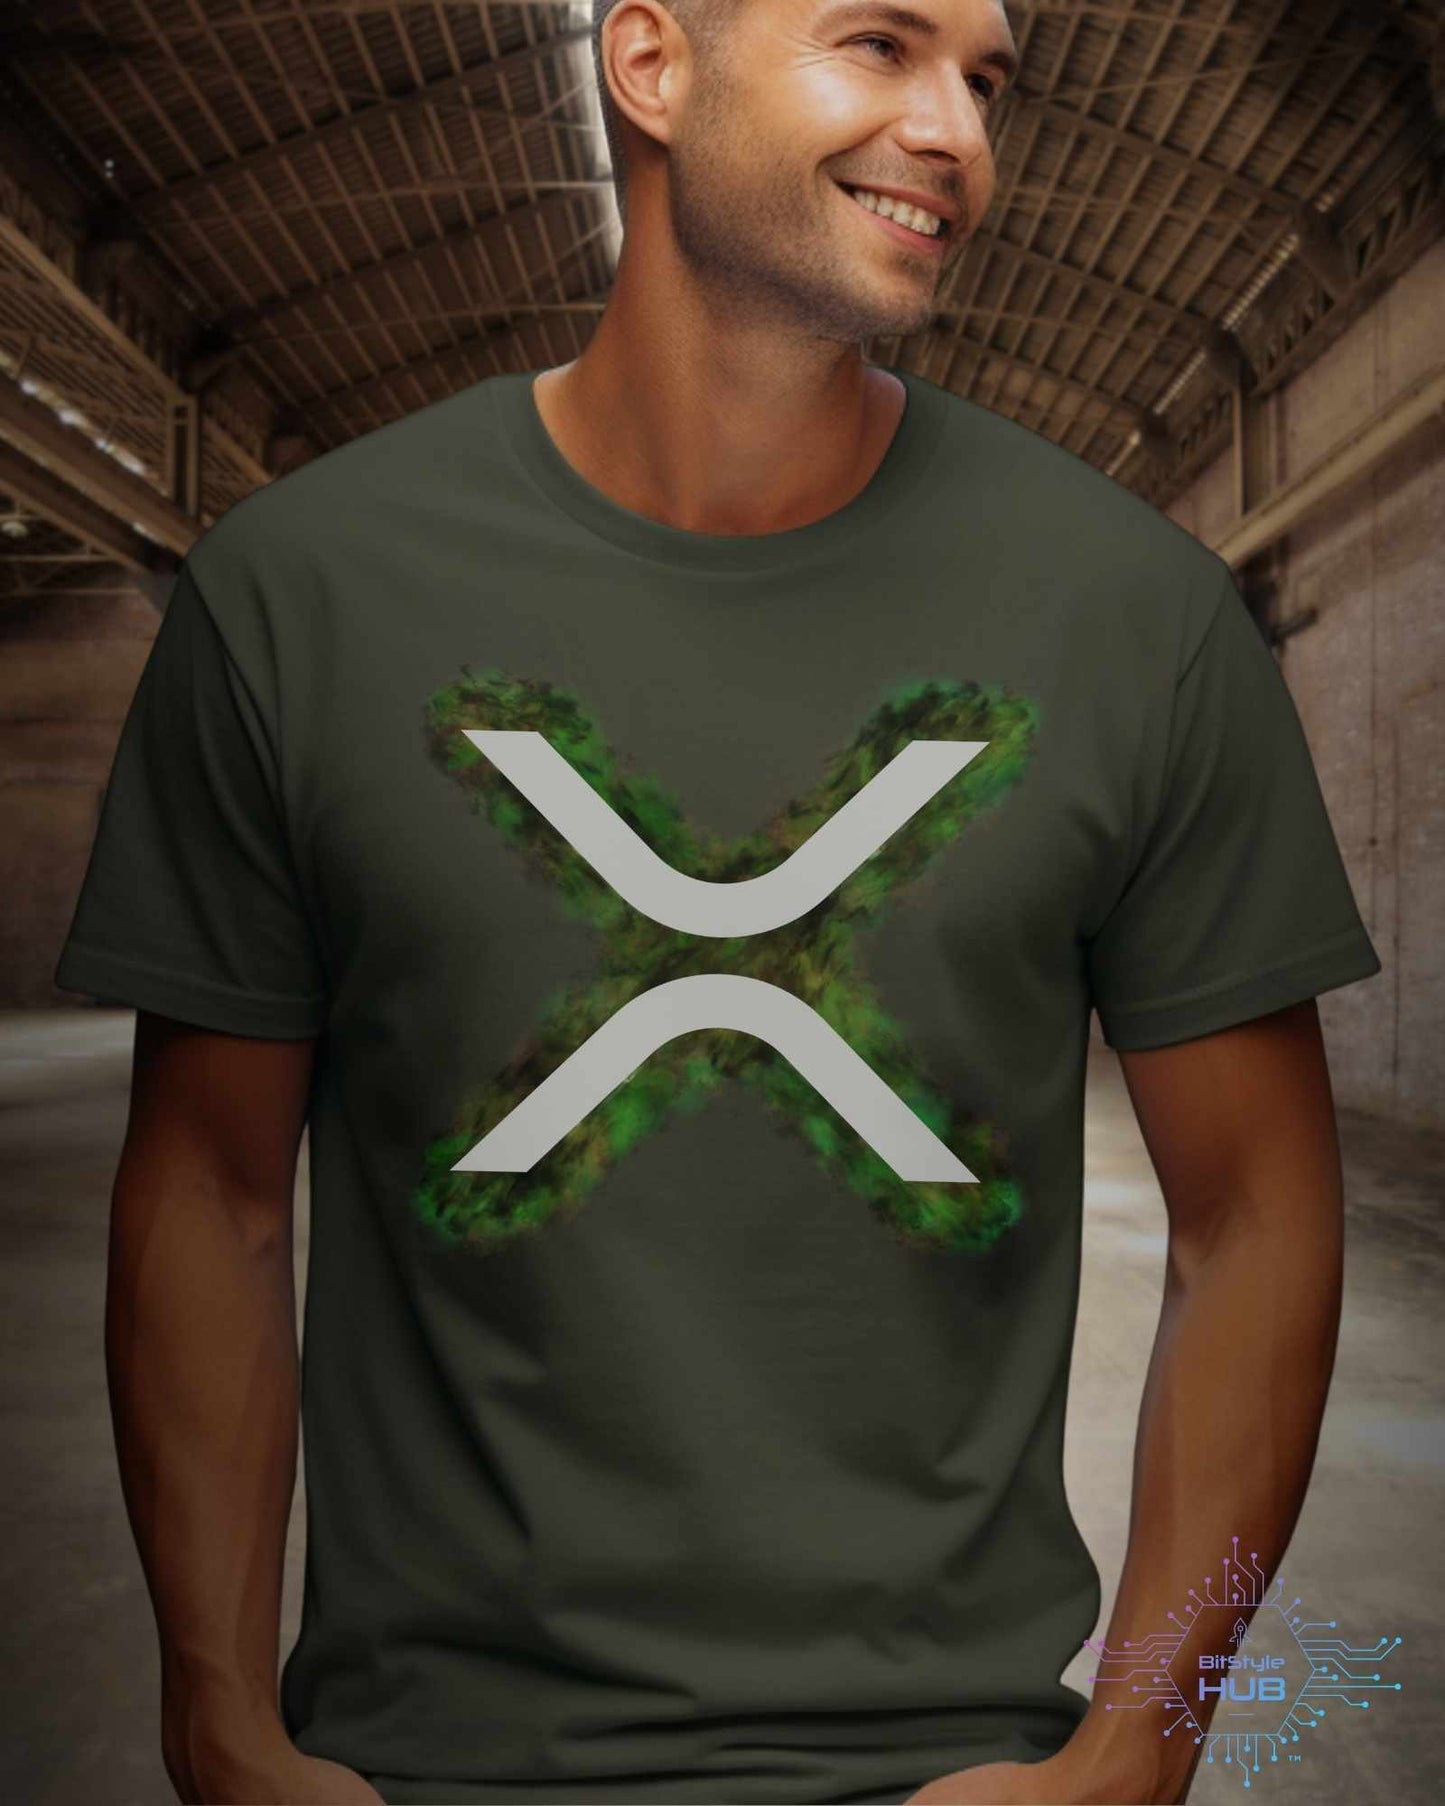 XRP ARMY X T-Shirt Unisex Crypto Apparel